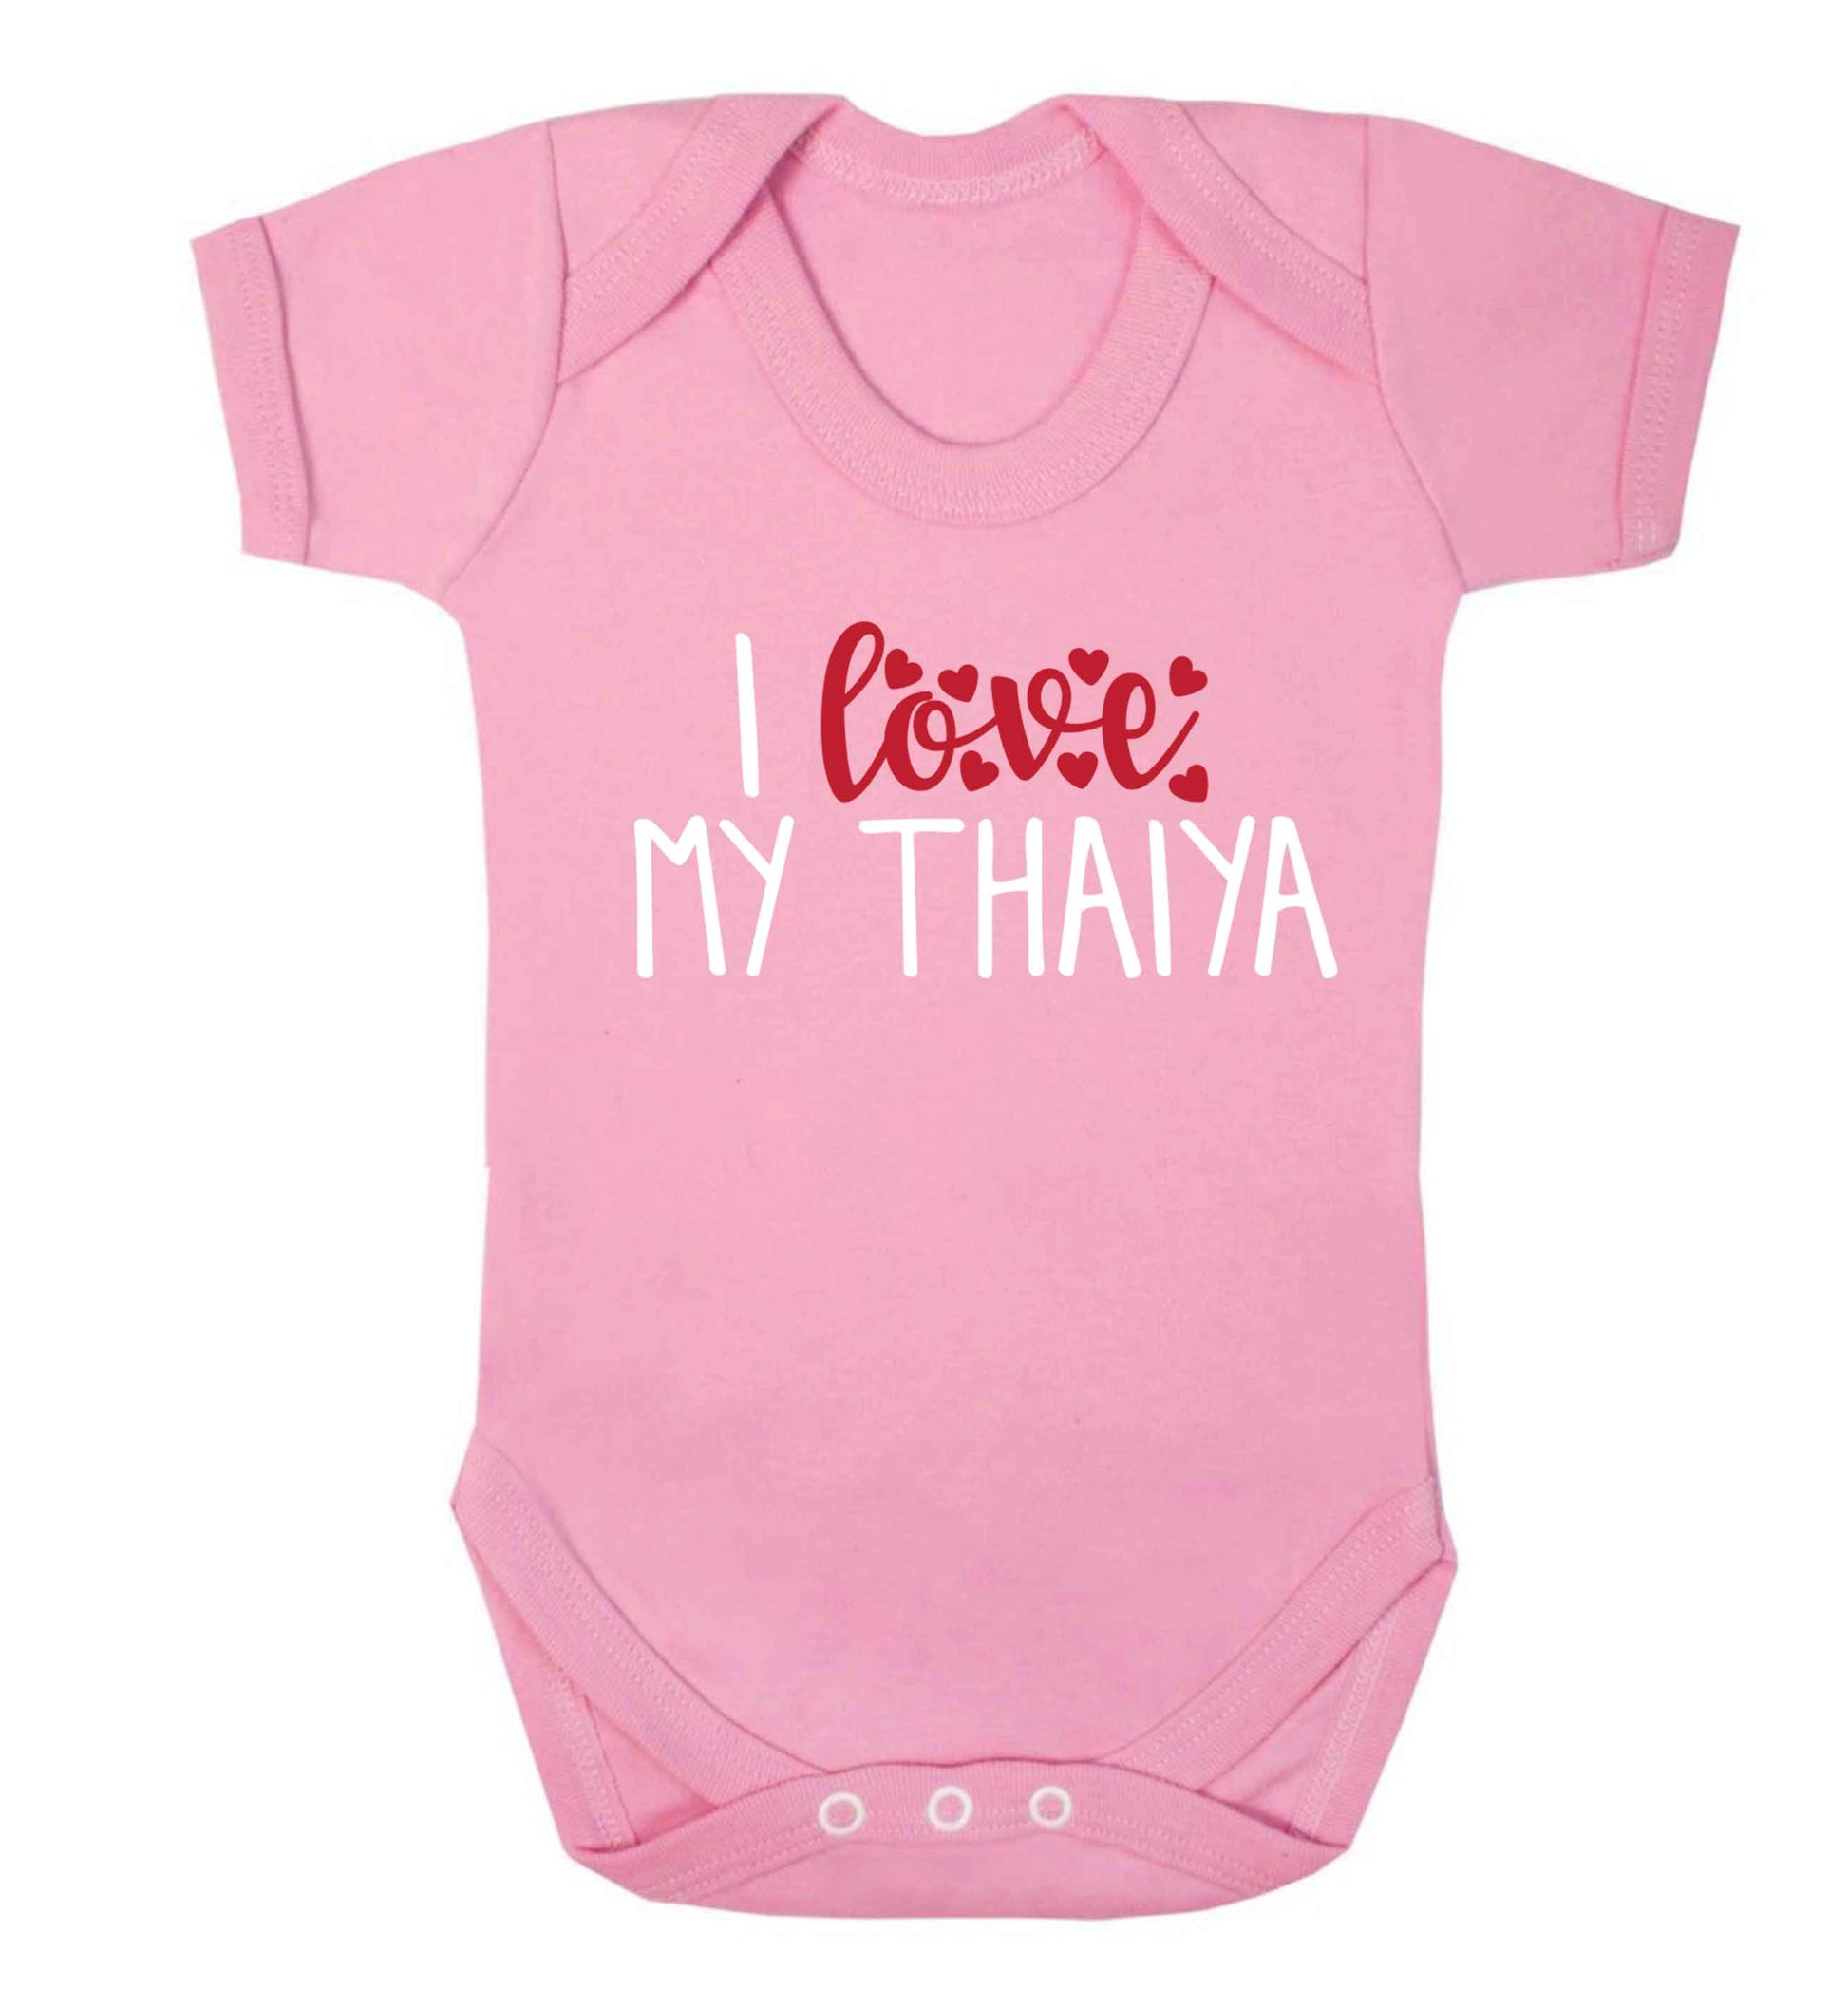 I love my thaiya Baby Vest pale pink 18-24 months